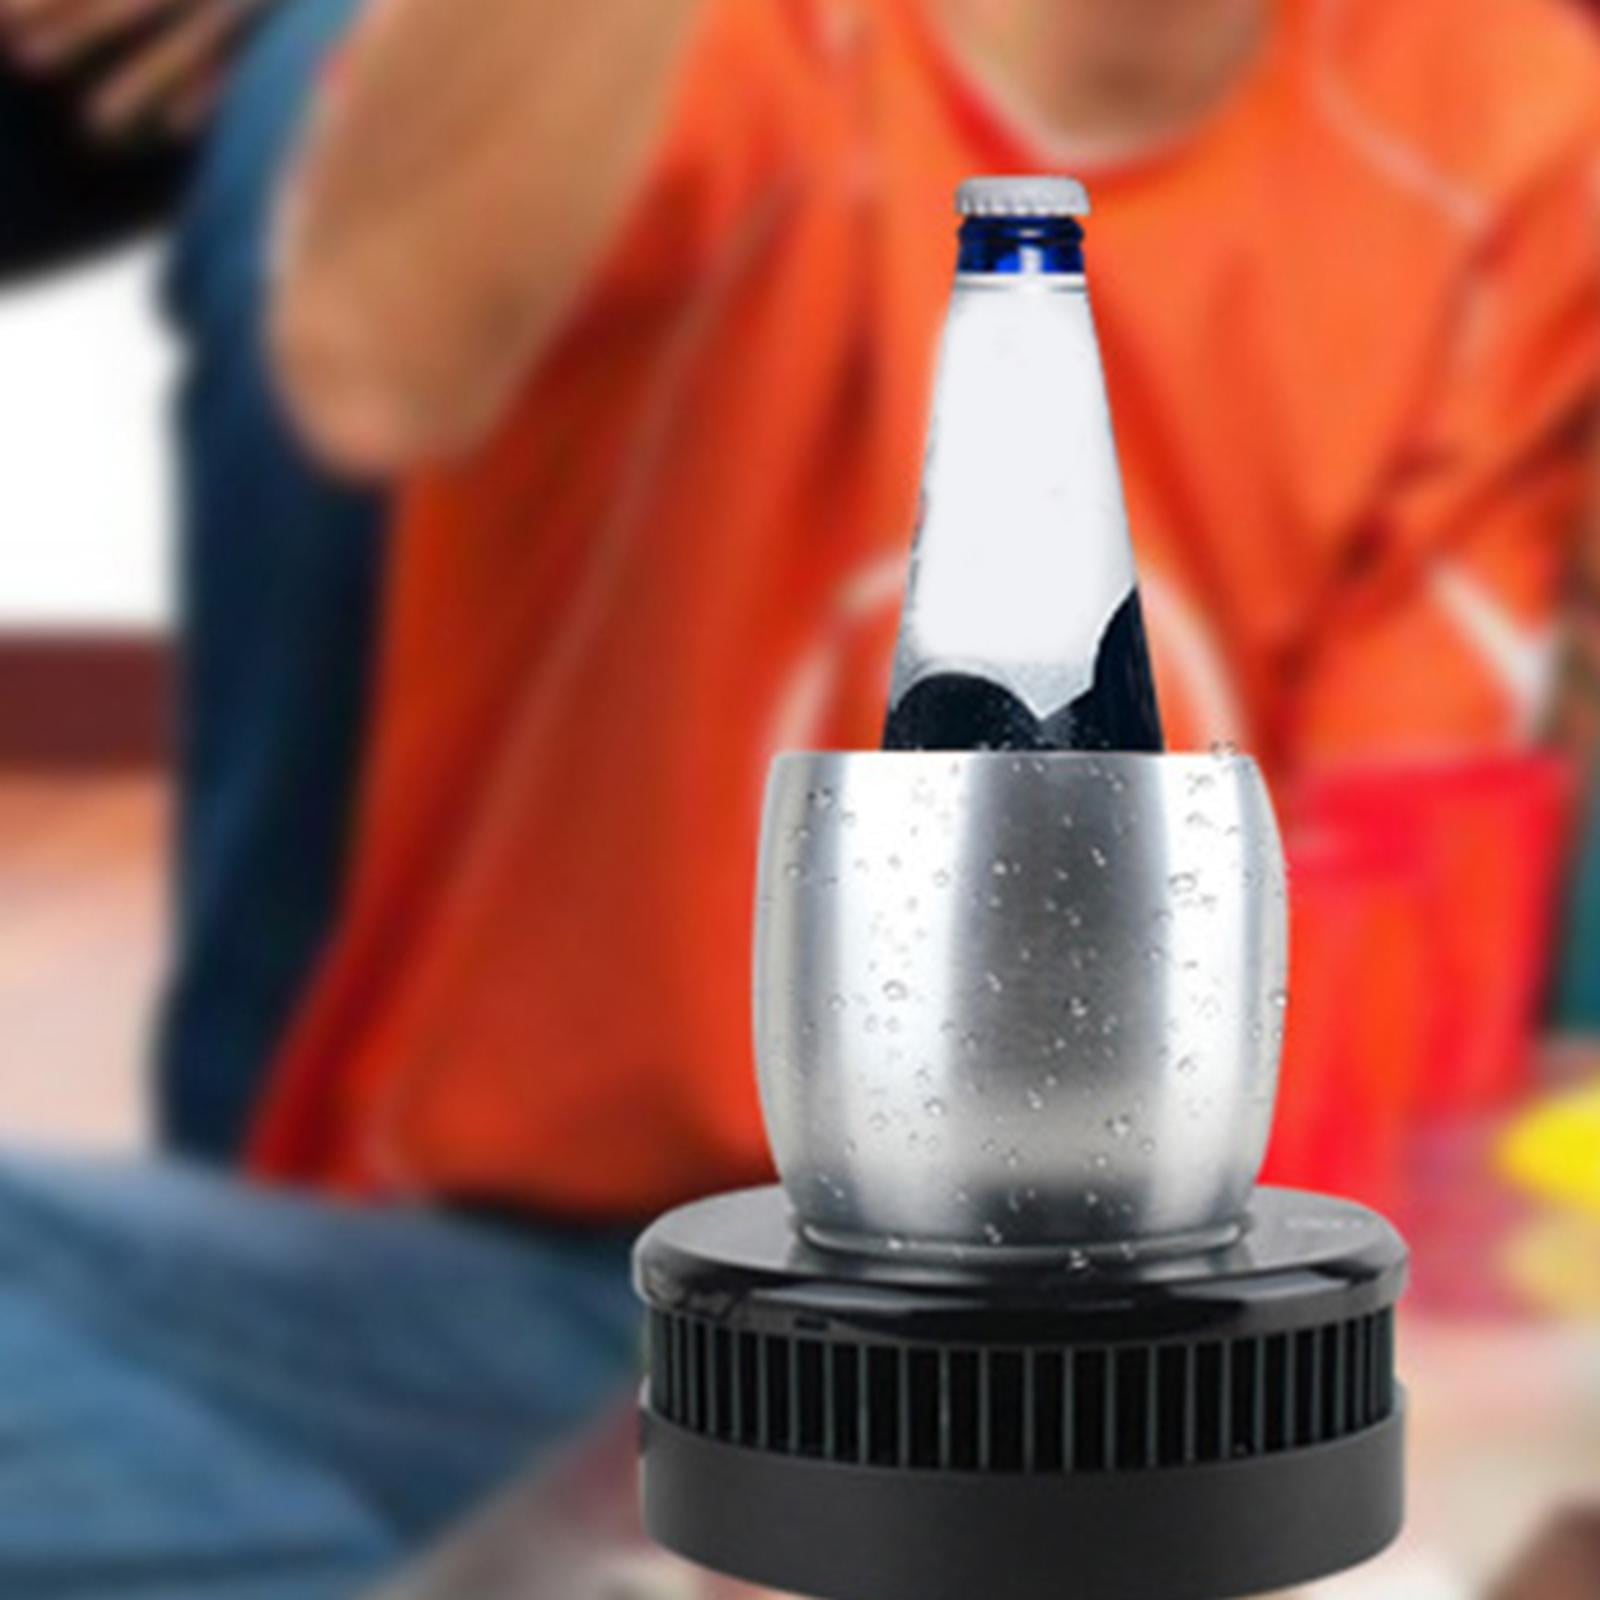 Mini Electric Cooling Cup Mug Desktop Beverage Coffee Beer Soda $25/ea -  appliances - by owner - sale - craigslist